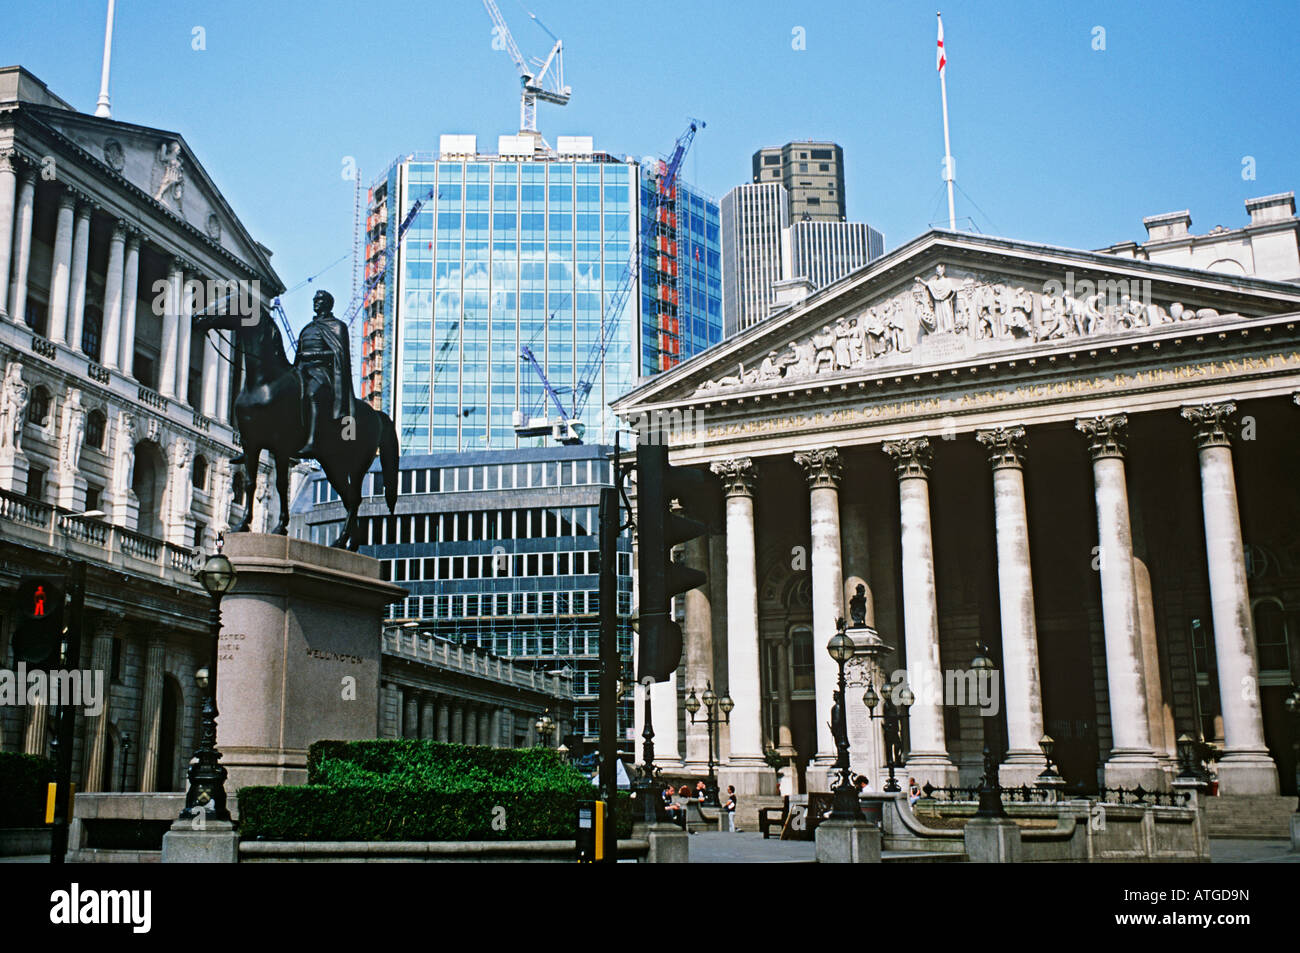 Royal exchange london Stock Photo